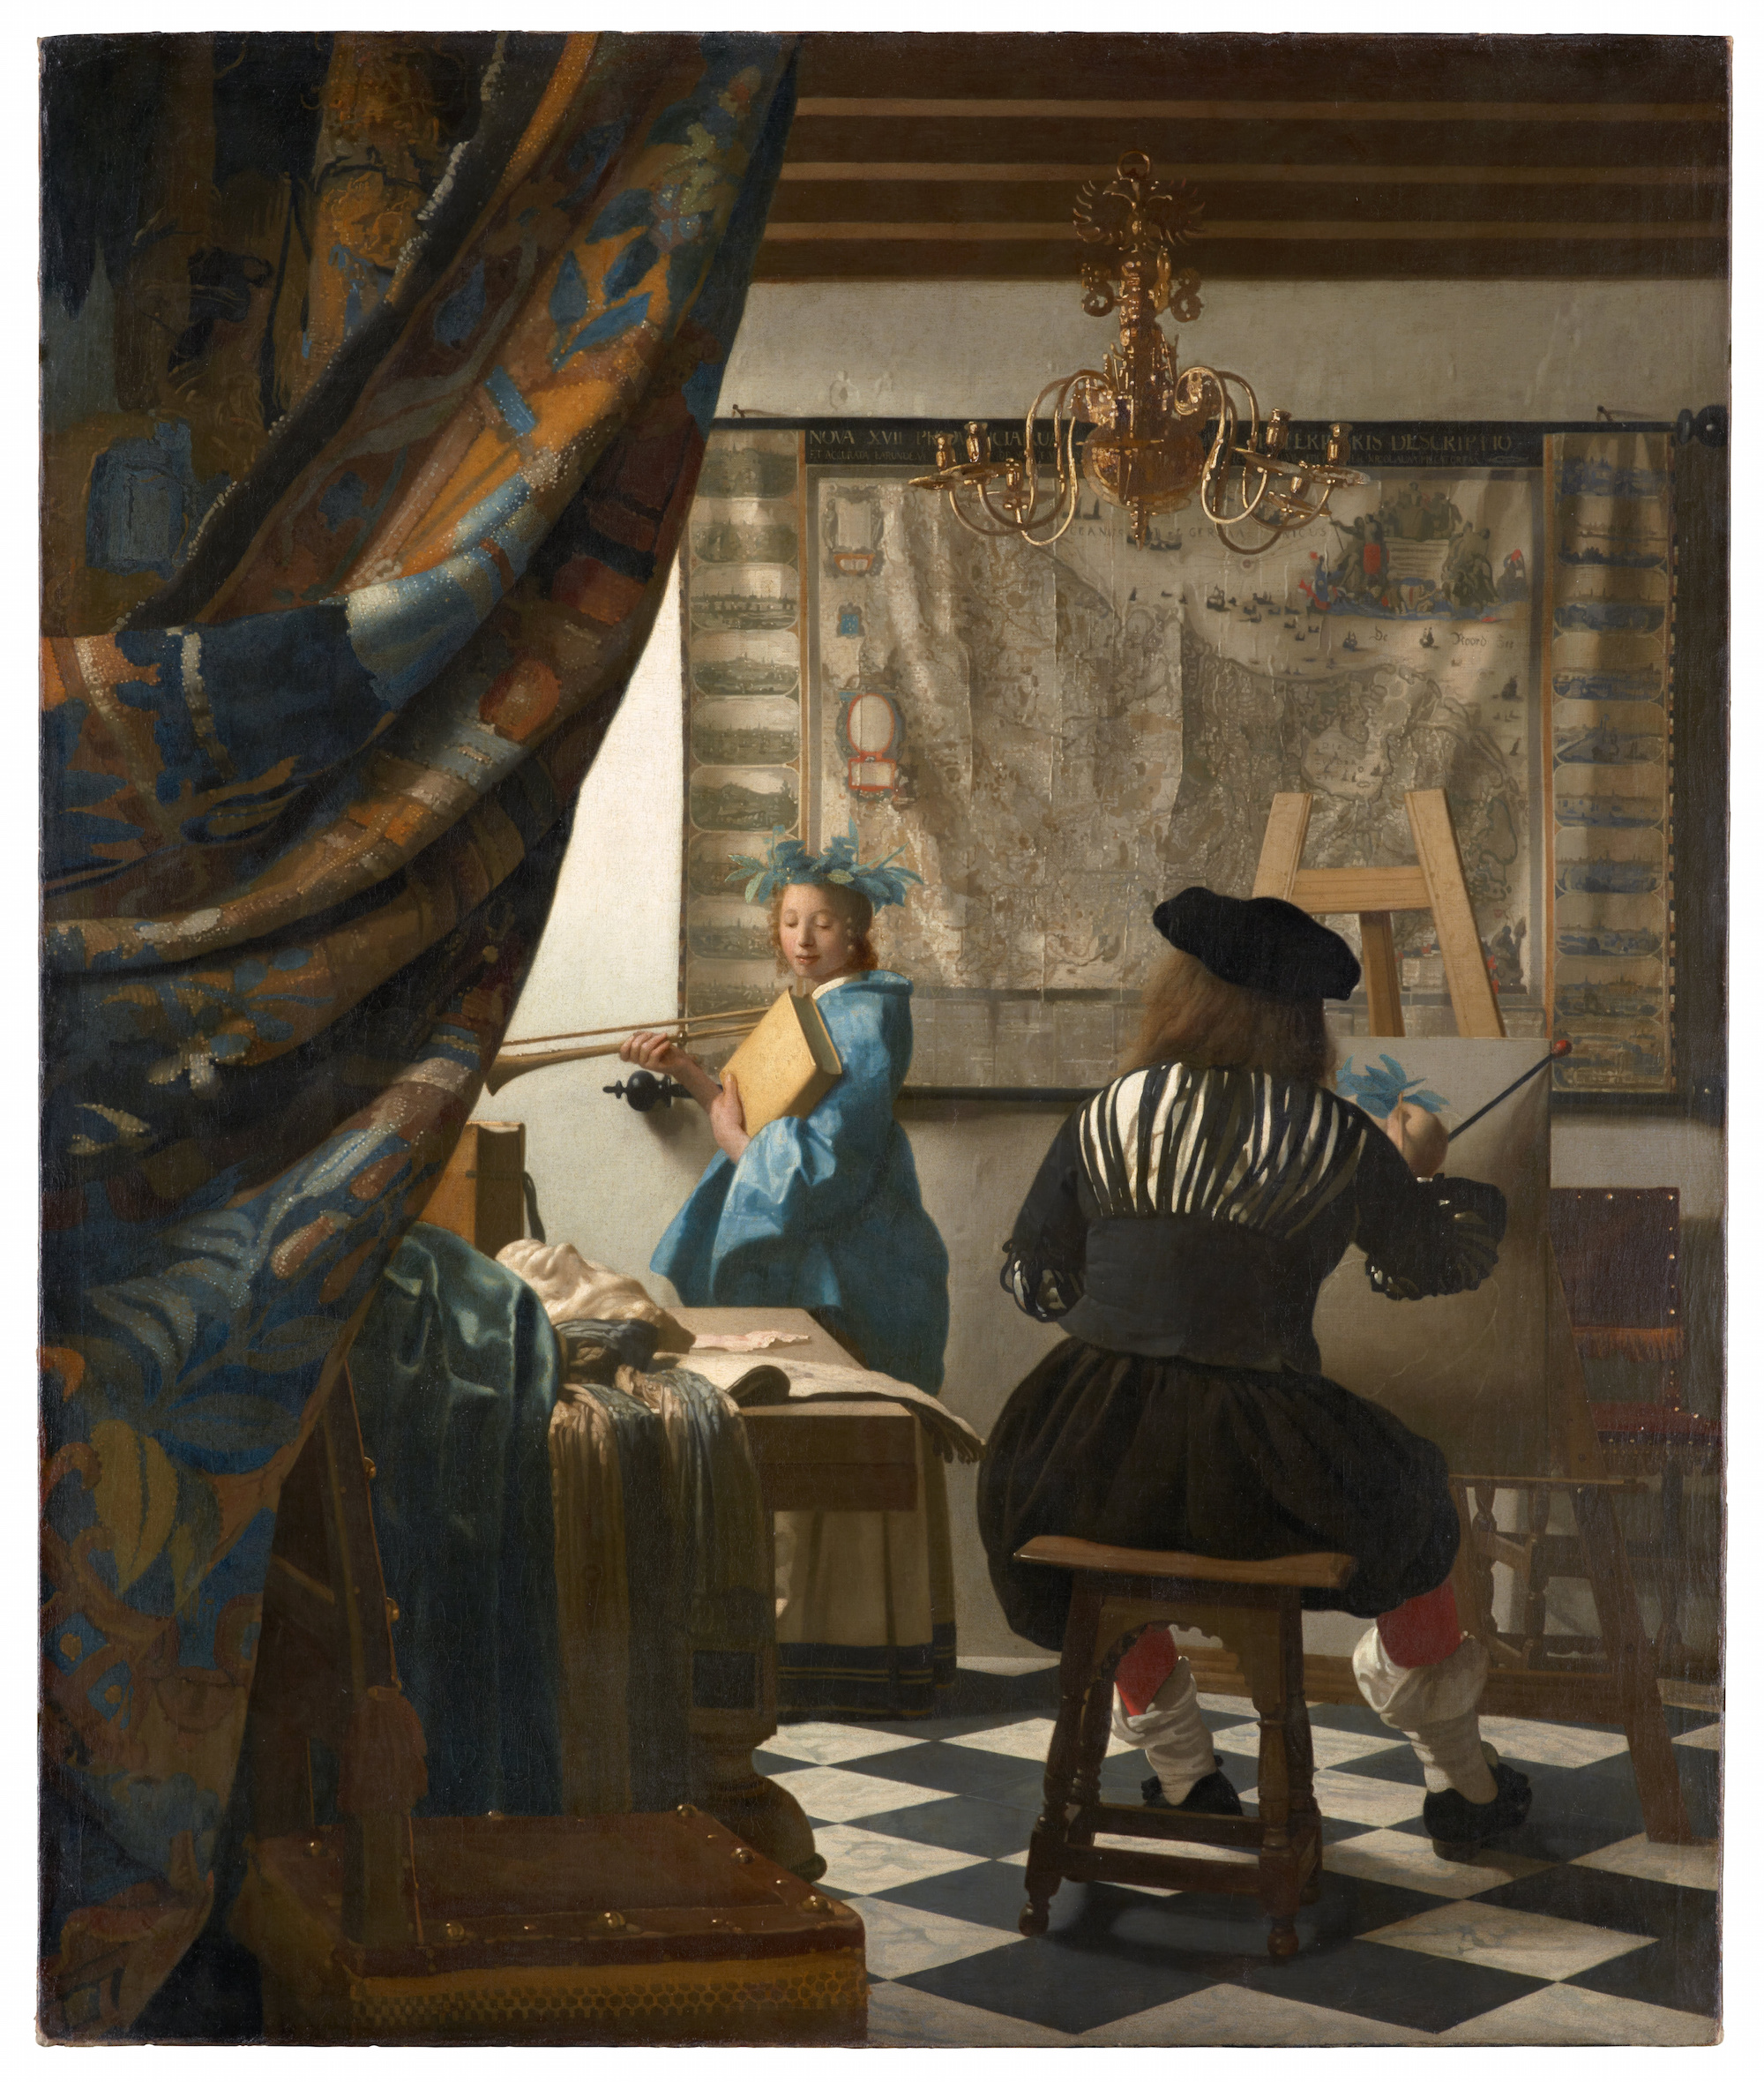 Sztuka Malarska by Johannes Vermeer - 1665-1668 - 130 cm × 110 cm 